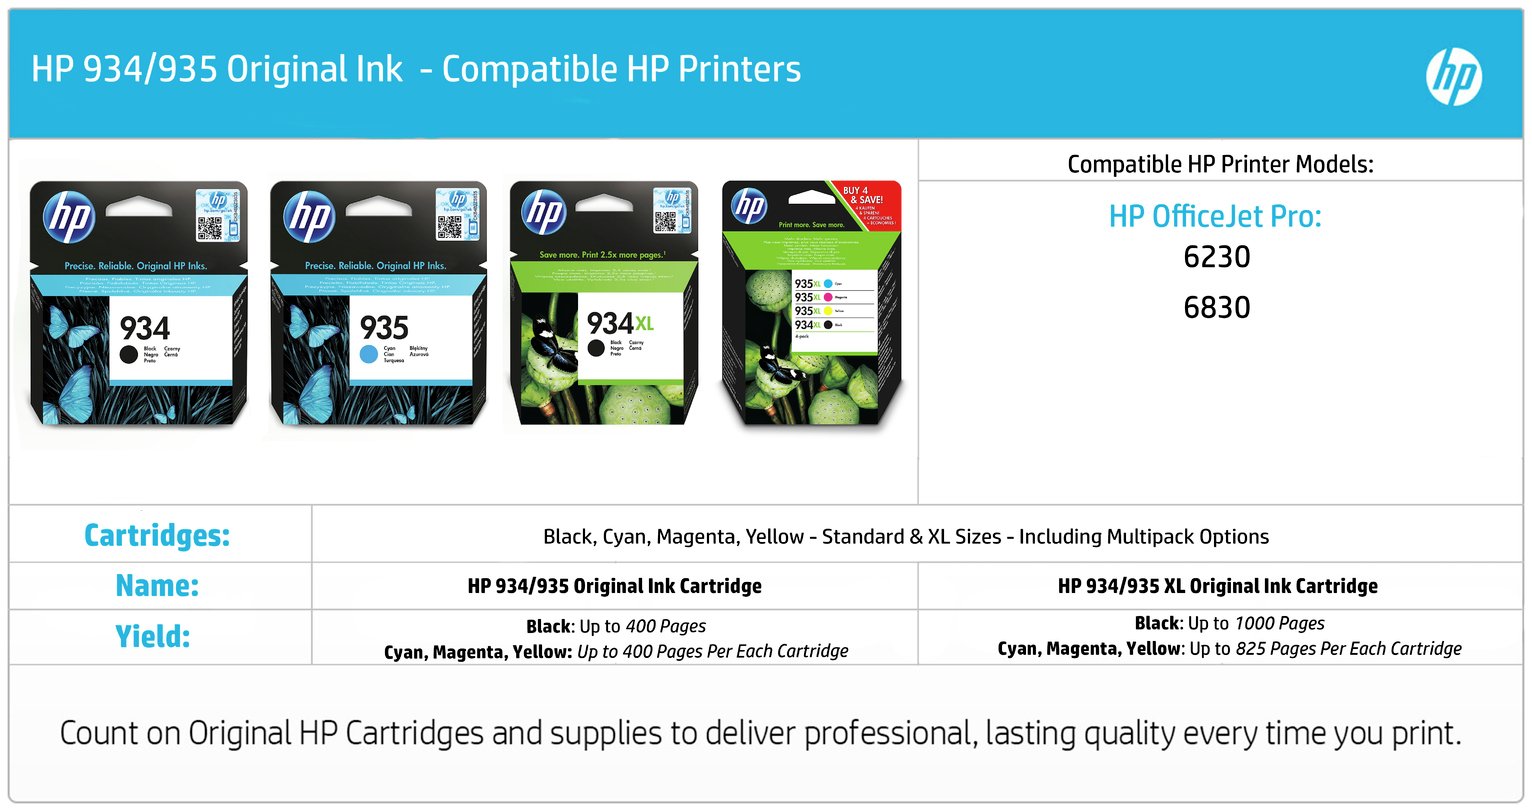 HP 935 XL Original Ink Cartridge Pack & Paper Value Bundle Review